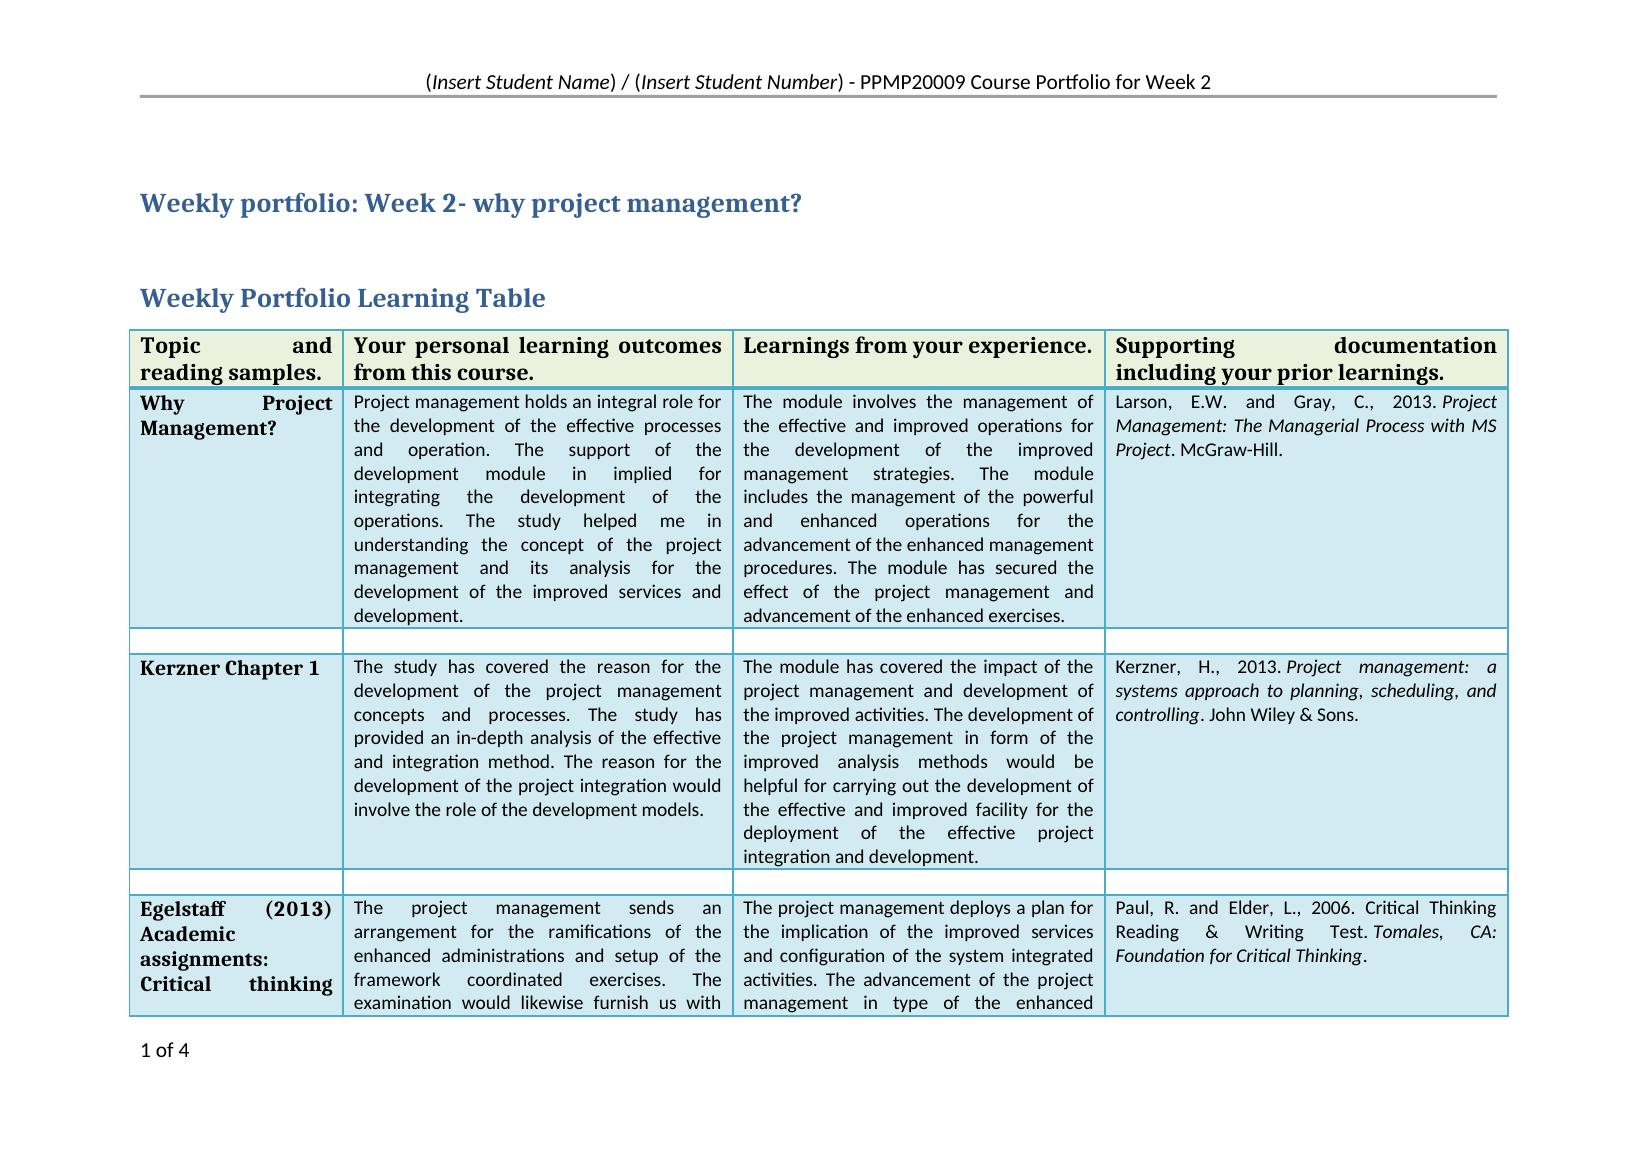 PPMP20012 Program and Portfolio Management Information : Assignment_1